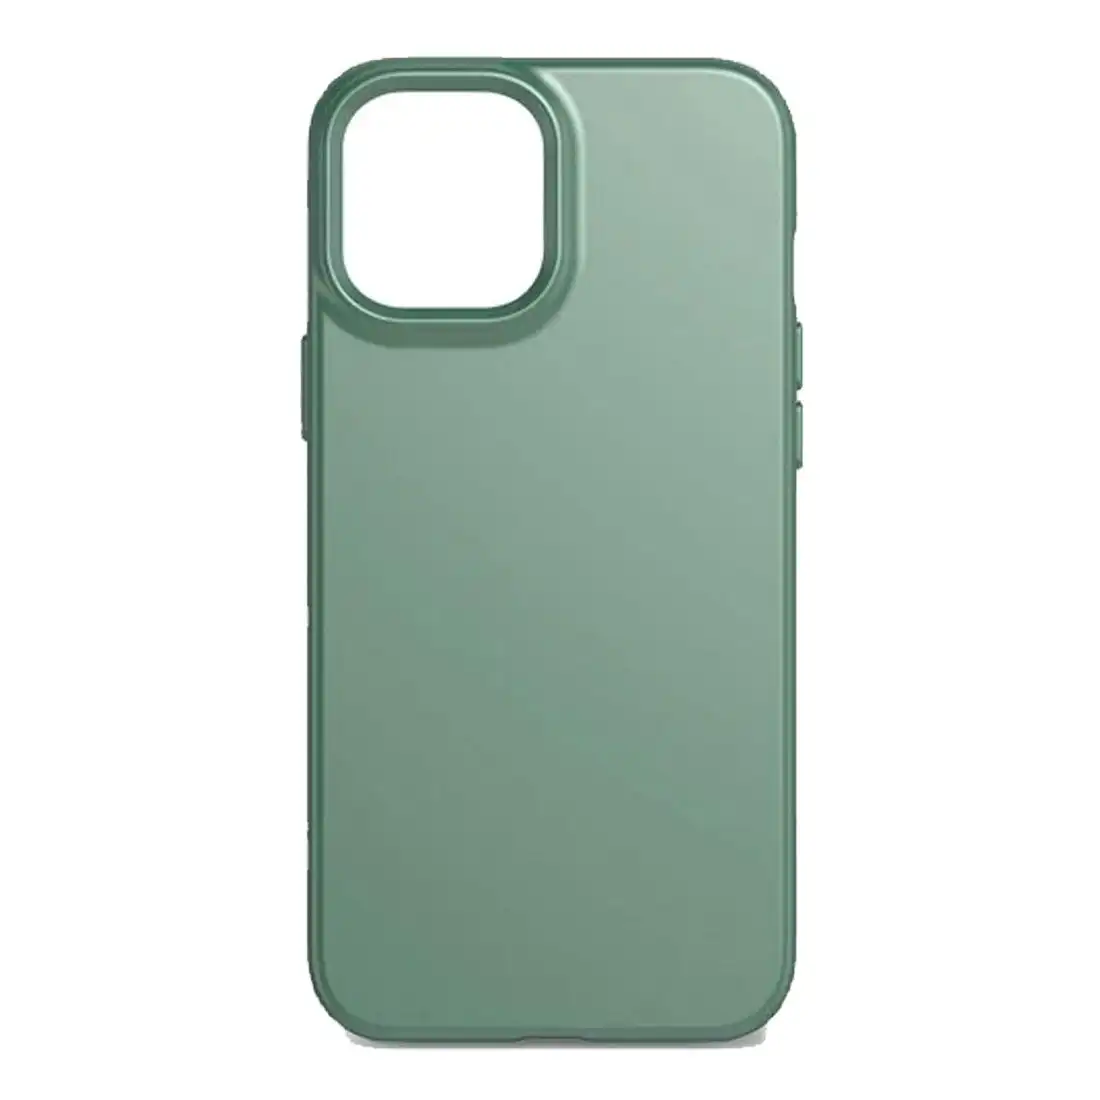 Tech21 Evo Slim Case for iPhone 12 Pro Max T21-8405 - Green